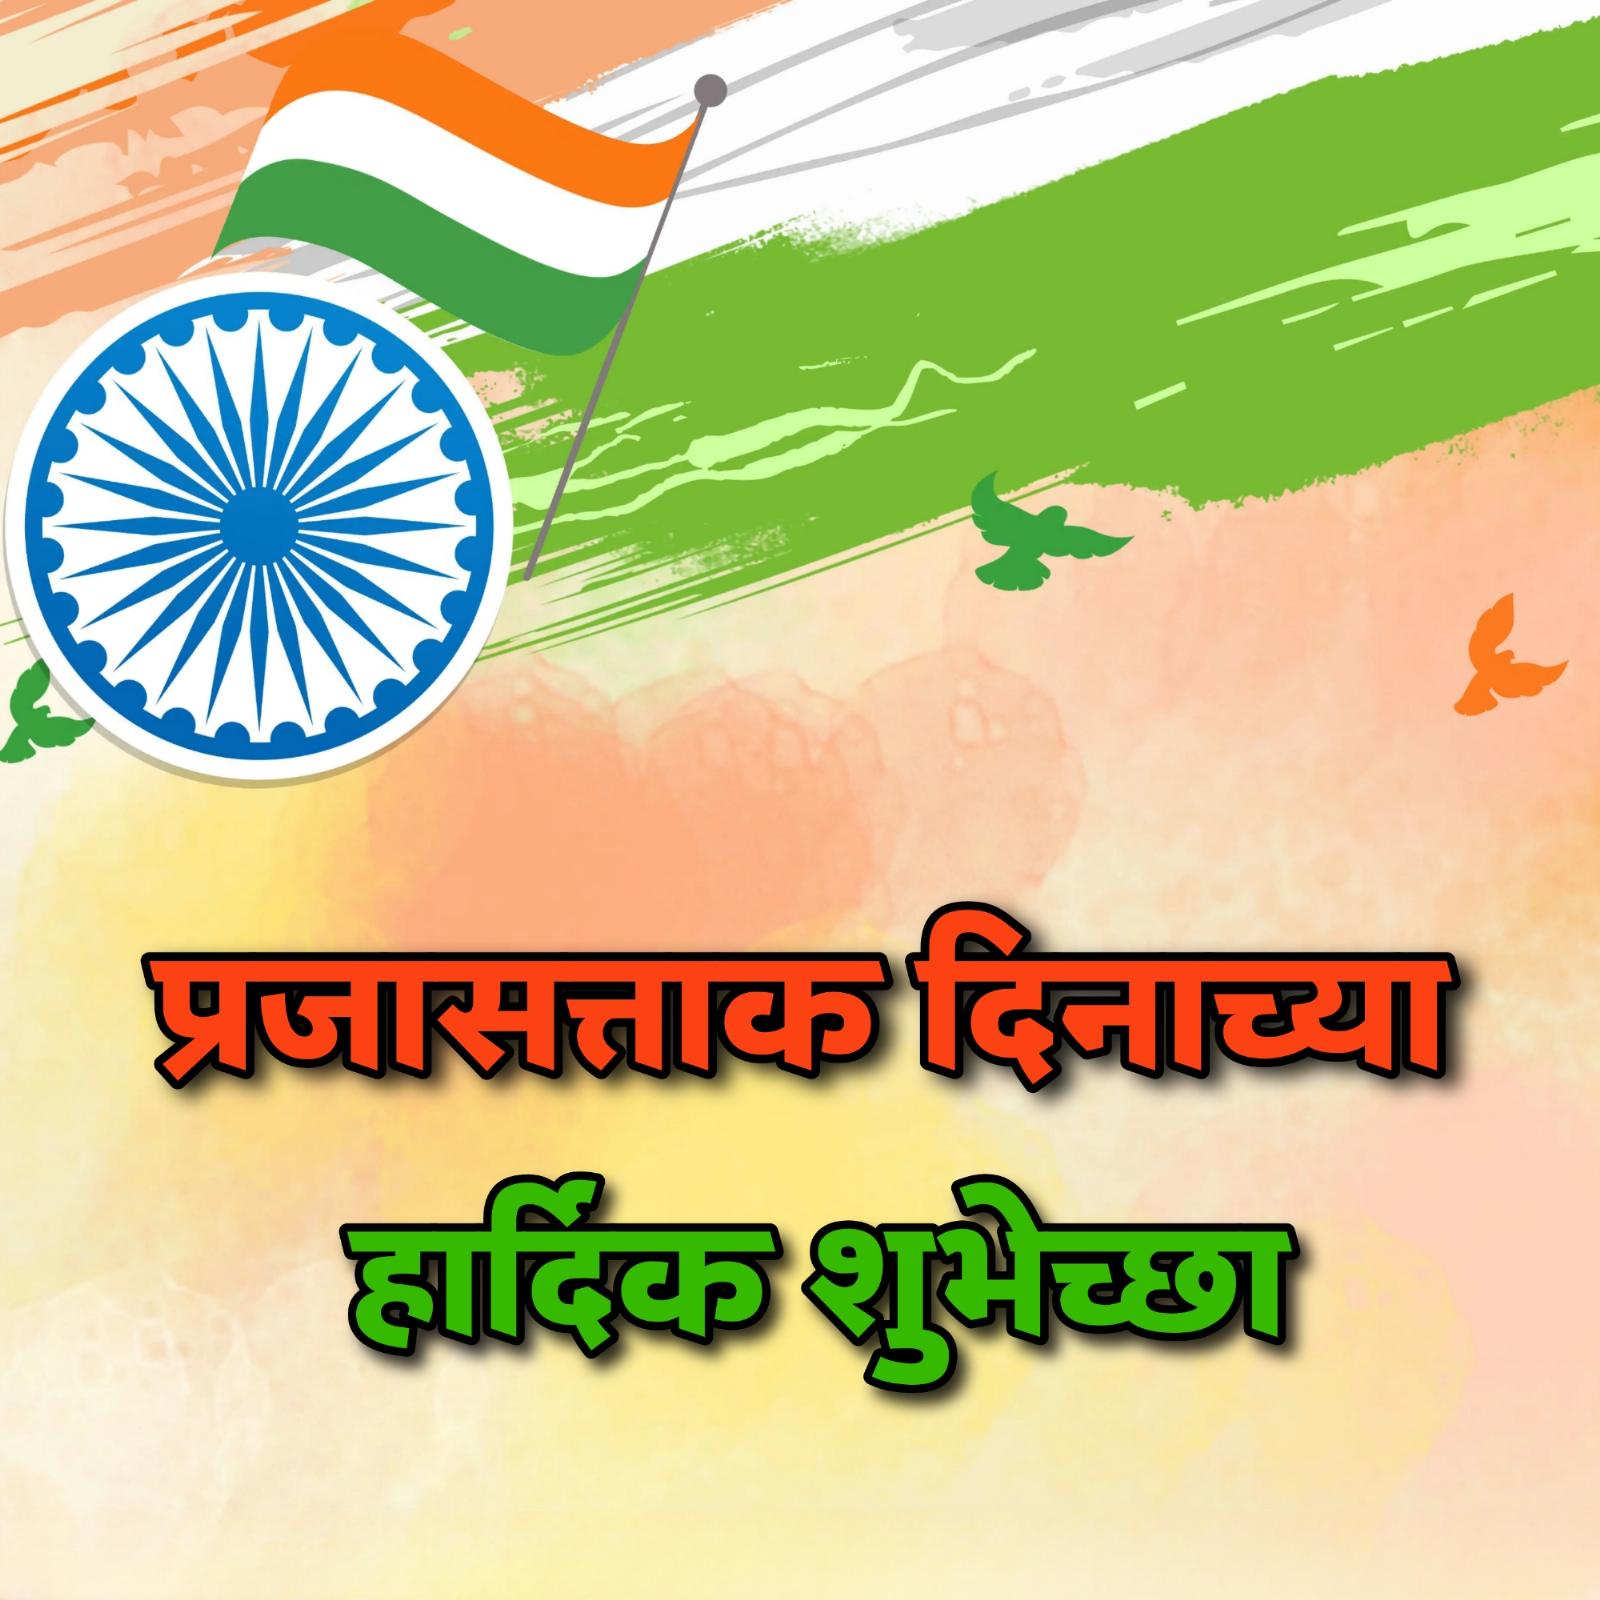 Happy Republic Day Images In Marathi